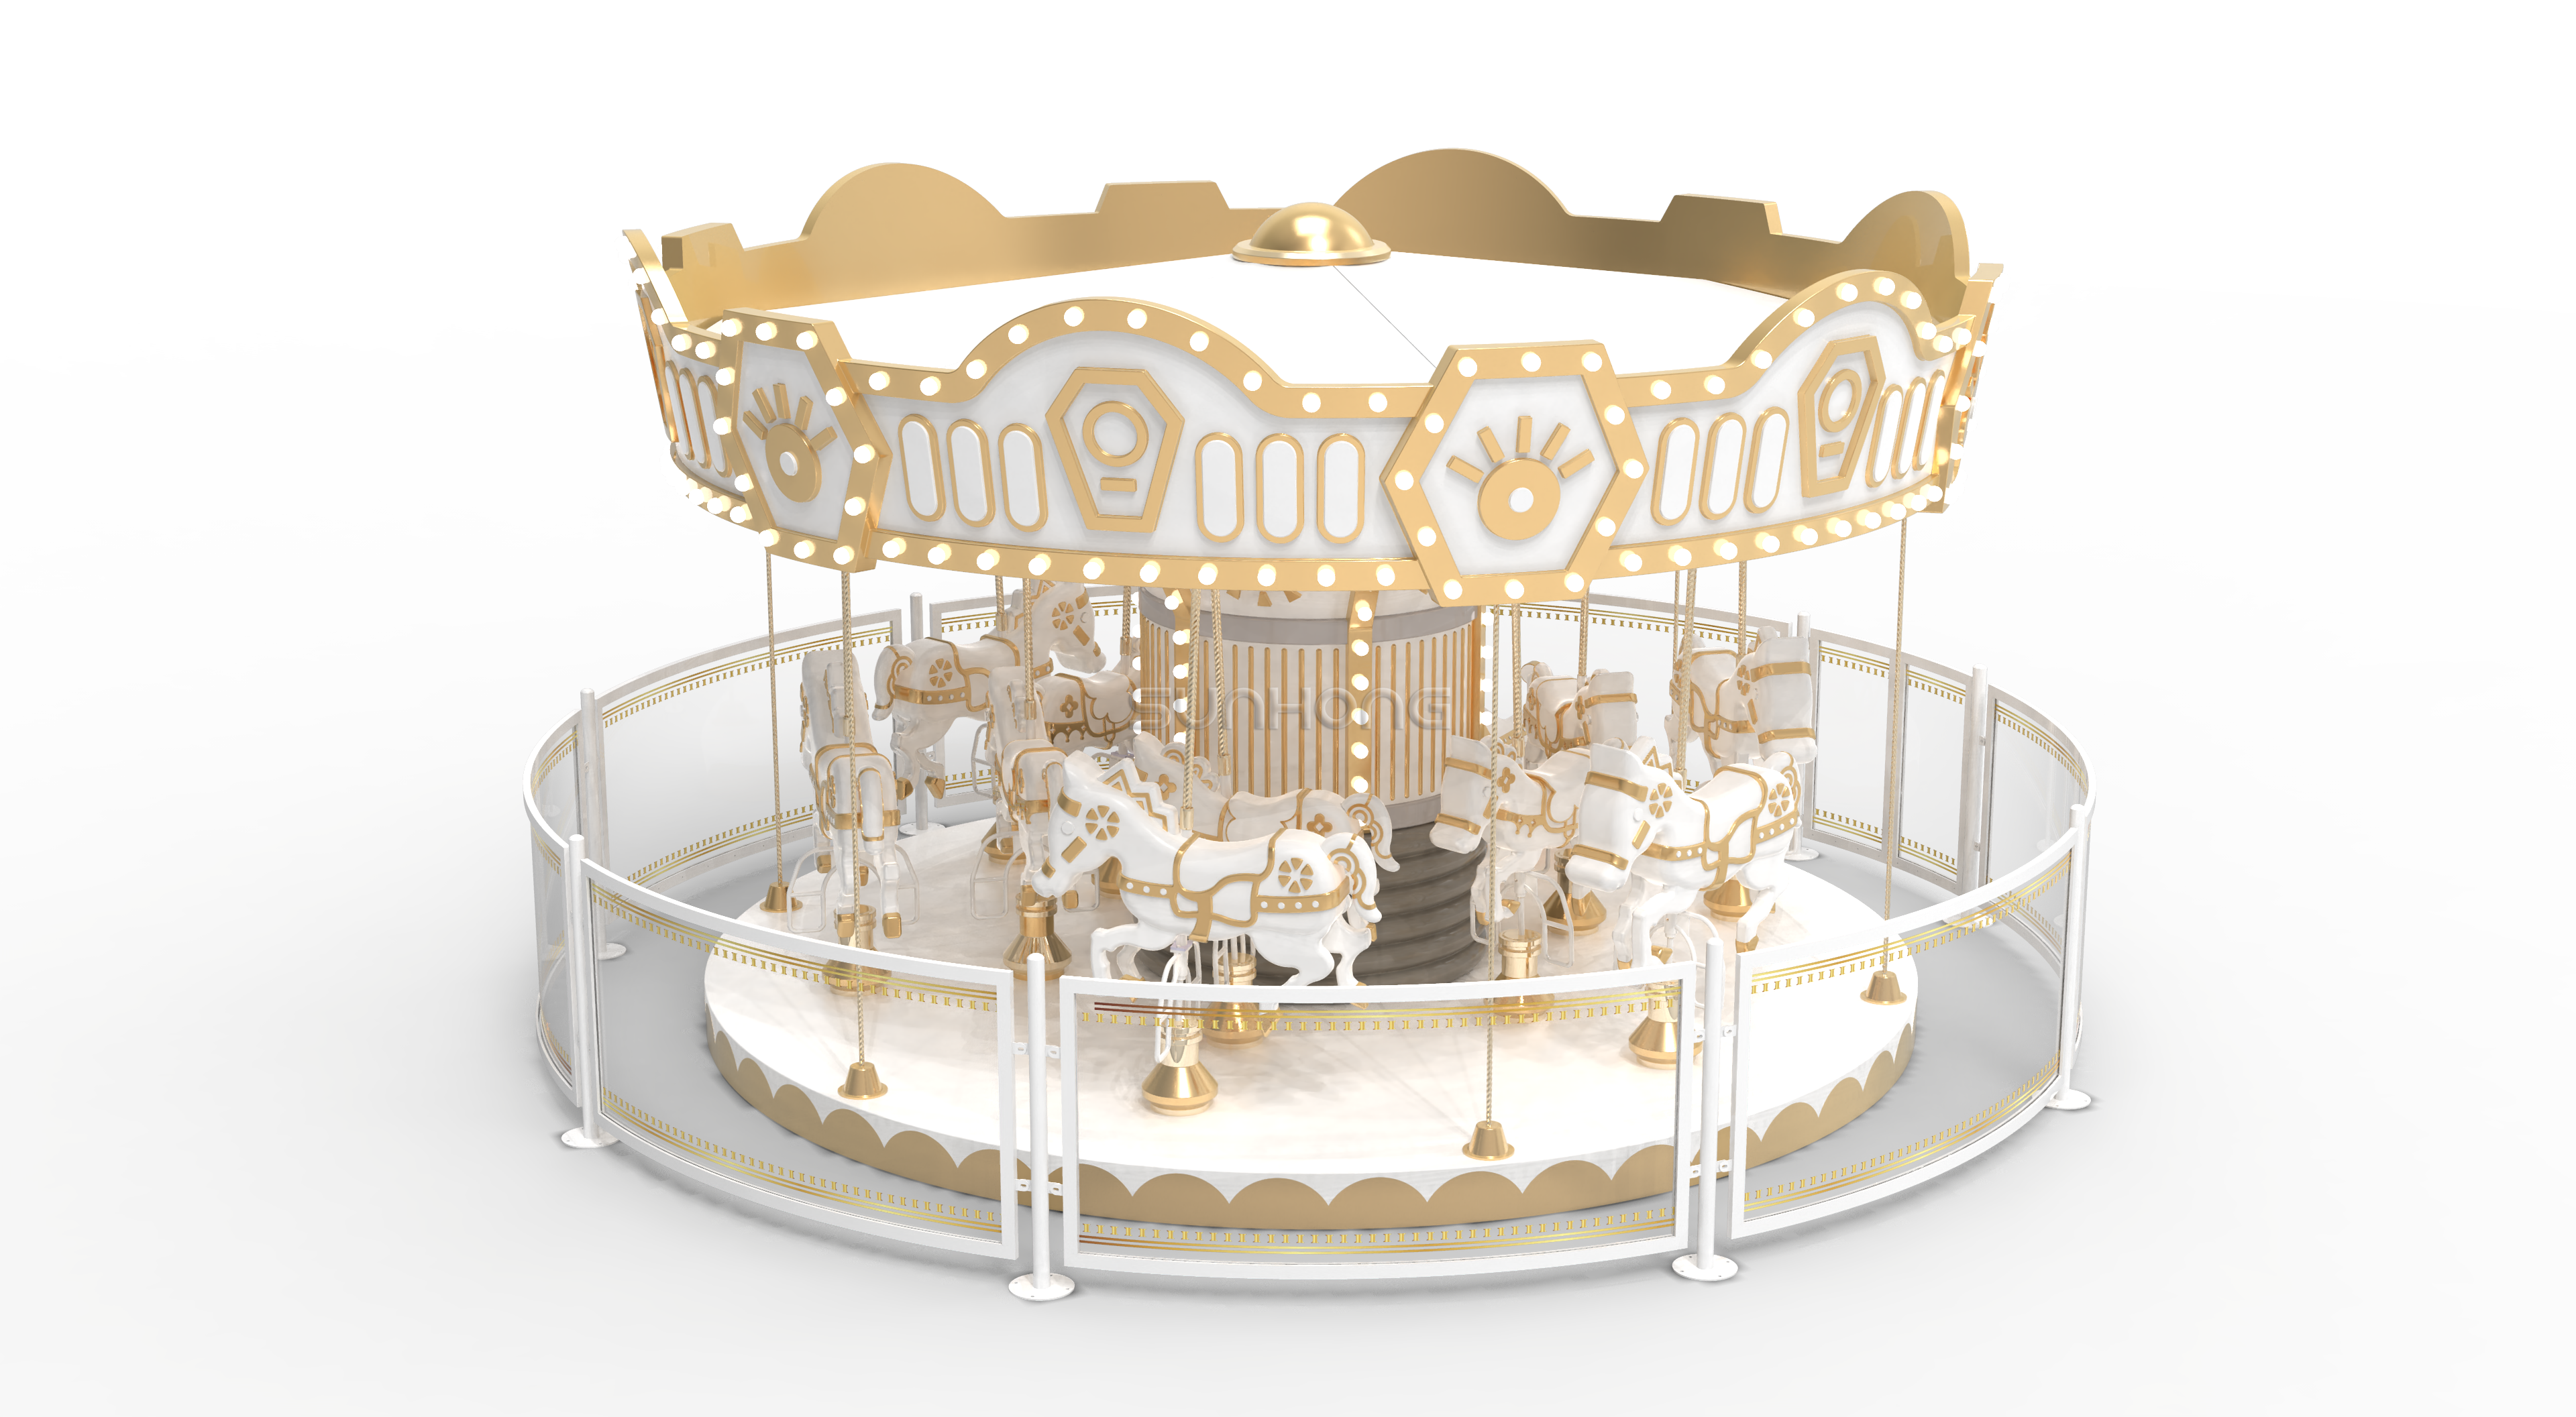 Earl Carousel-12Seats Merry Go Round King Arthur Disney World Rides